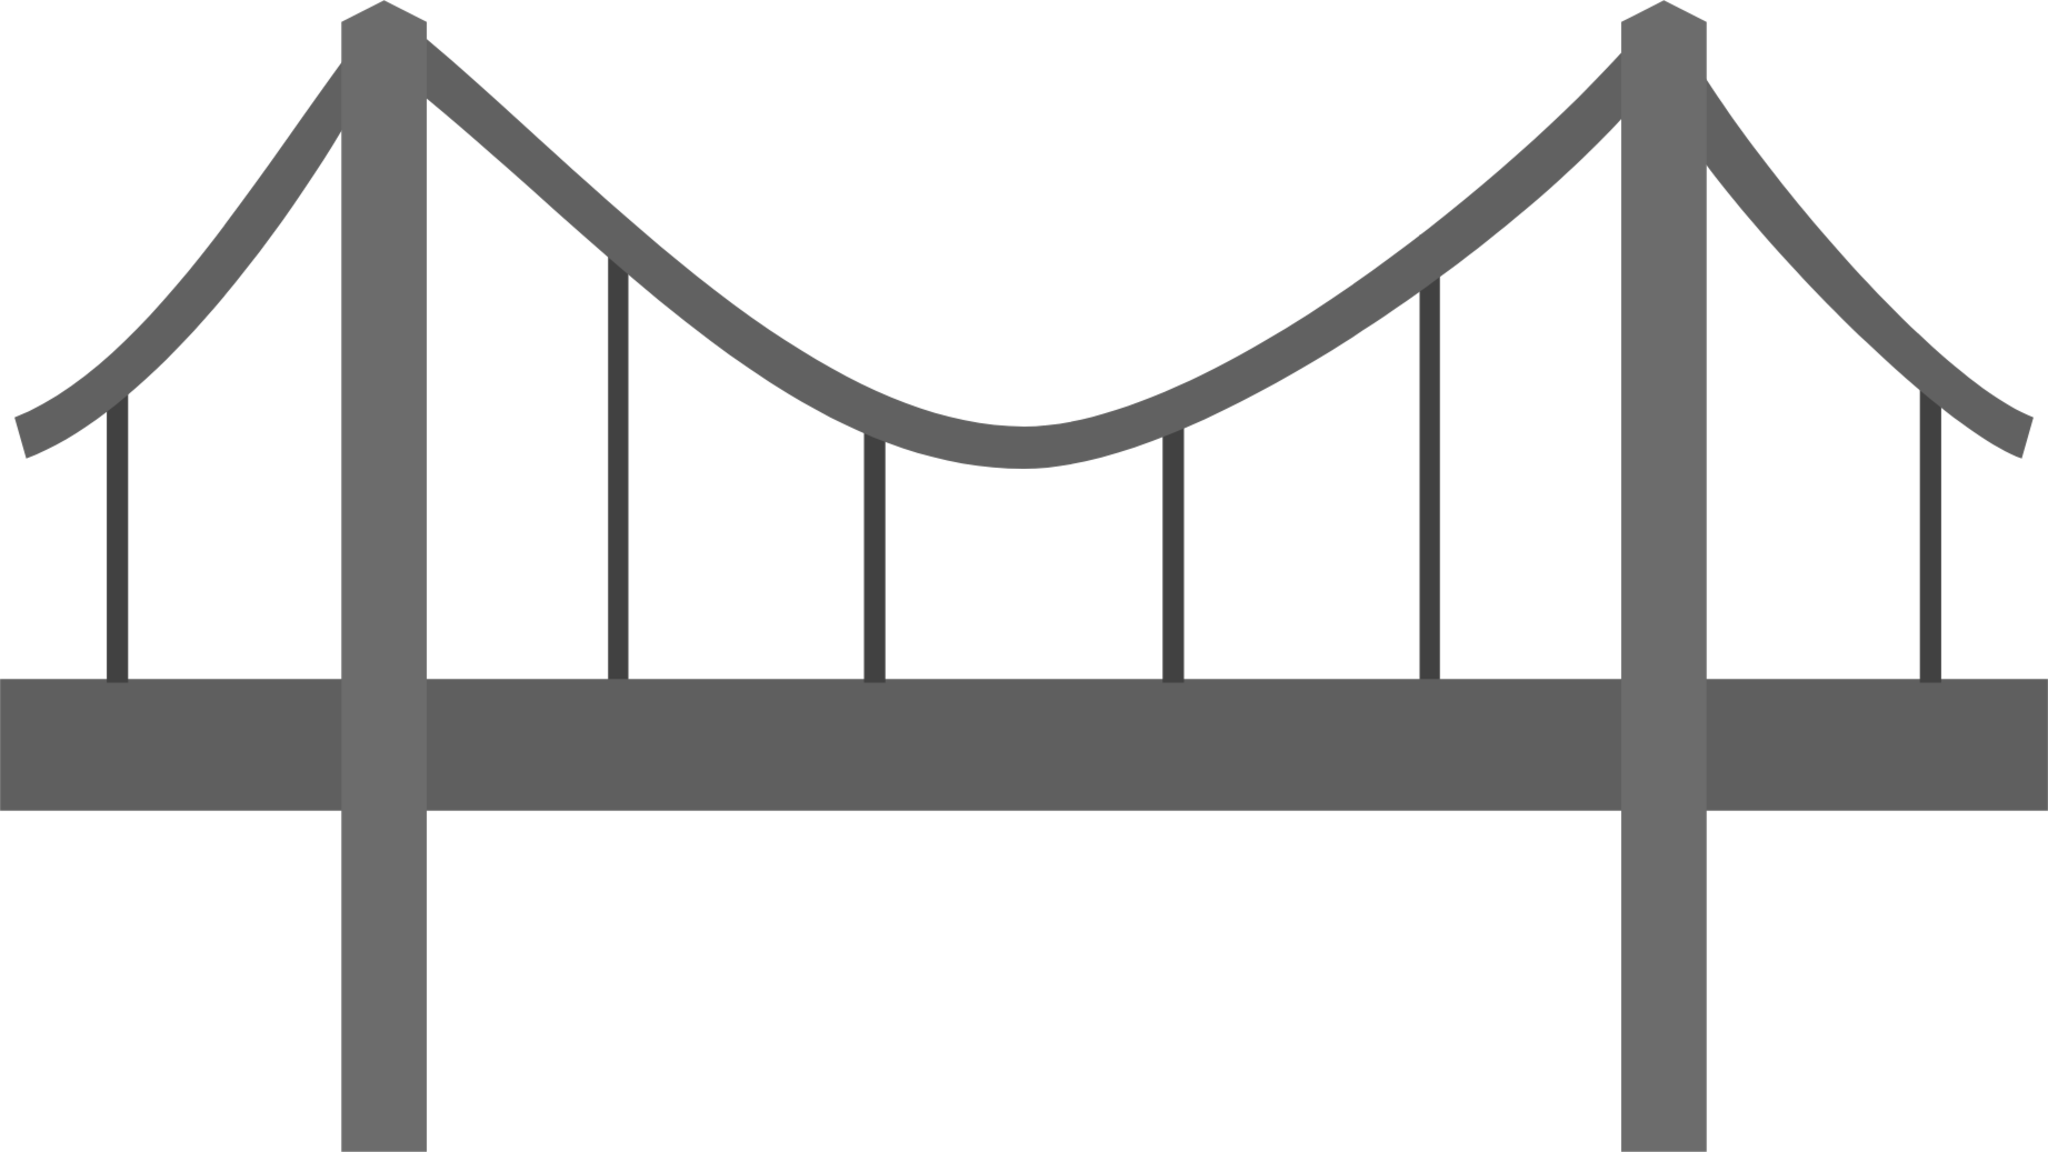 suspension bridge clipart black and white